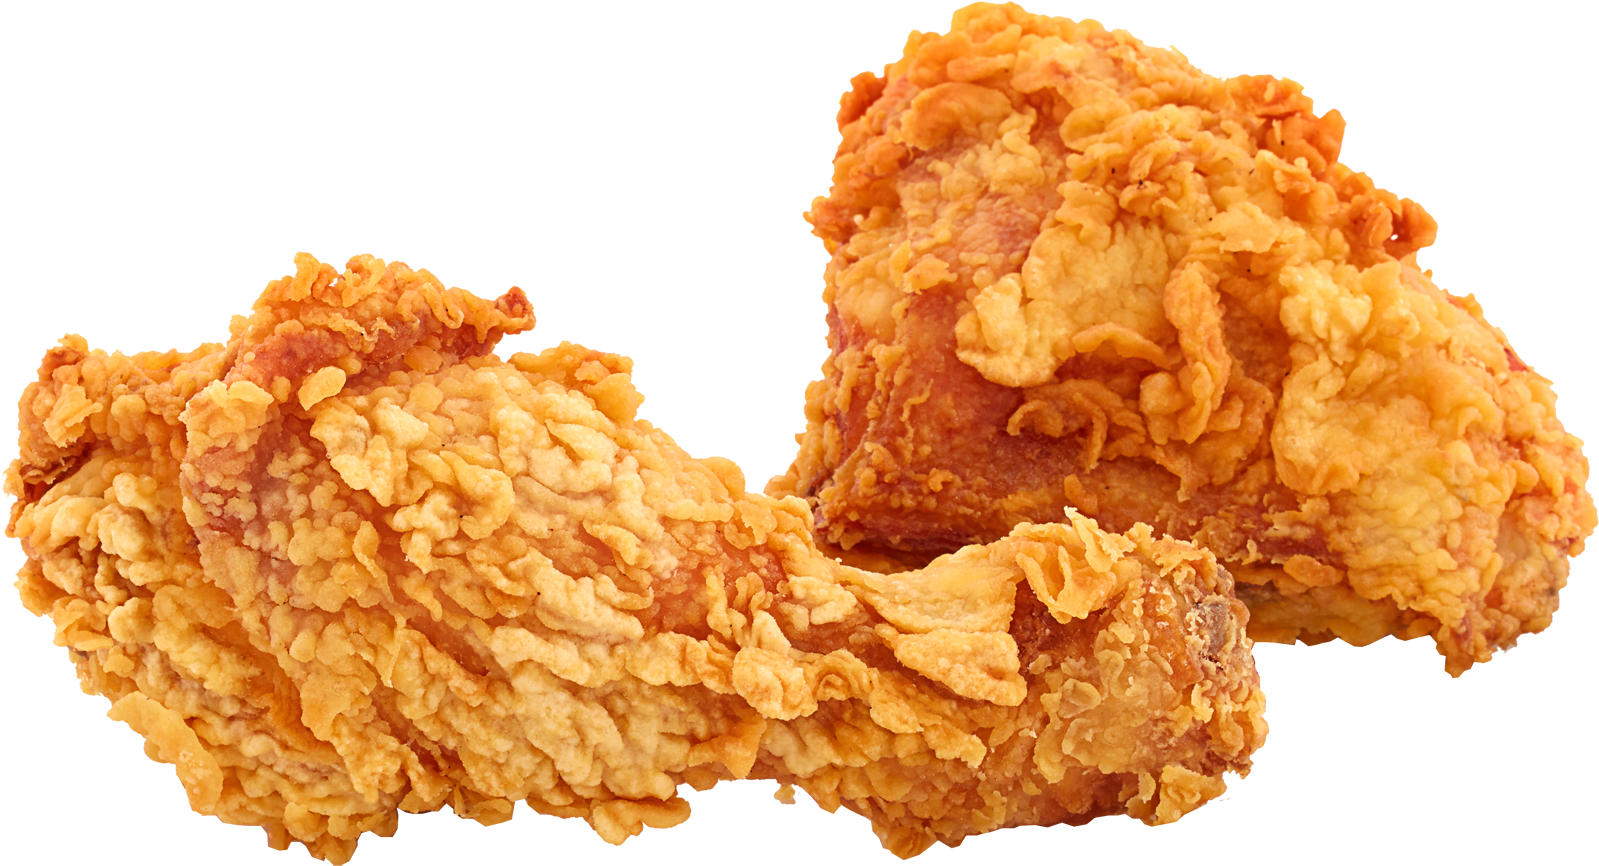 Pollo frito KFC PNG